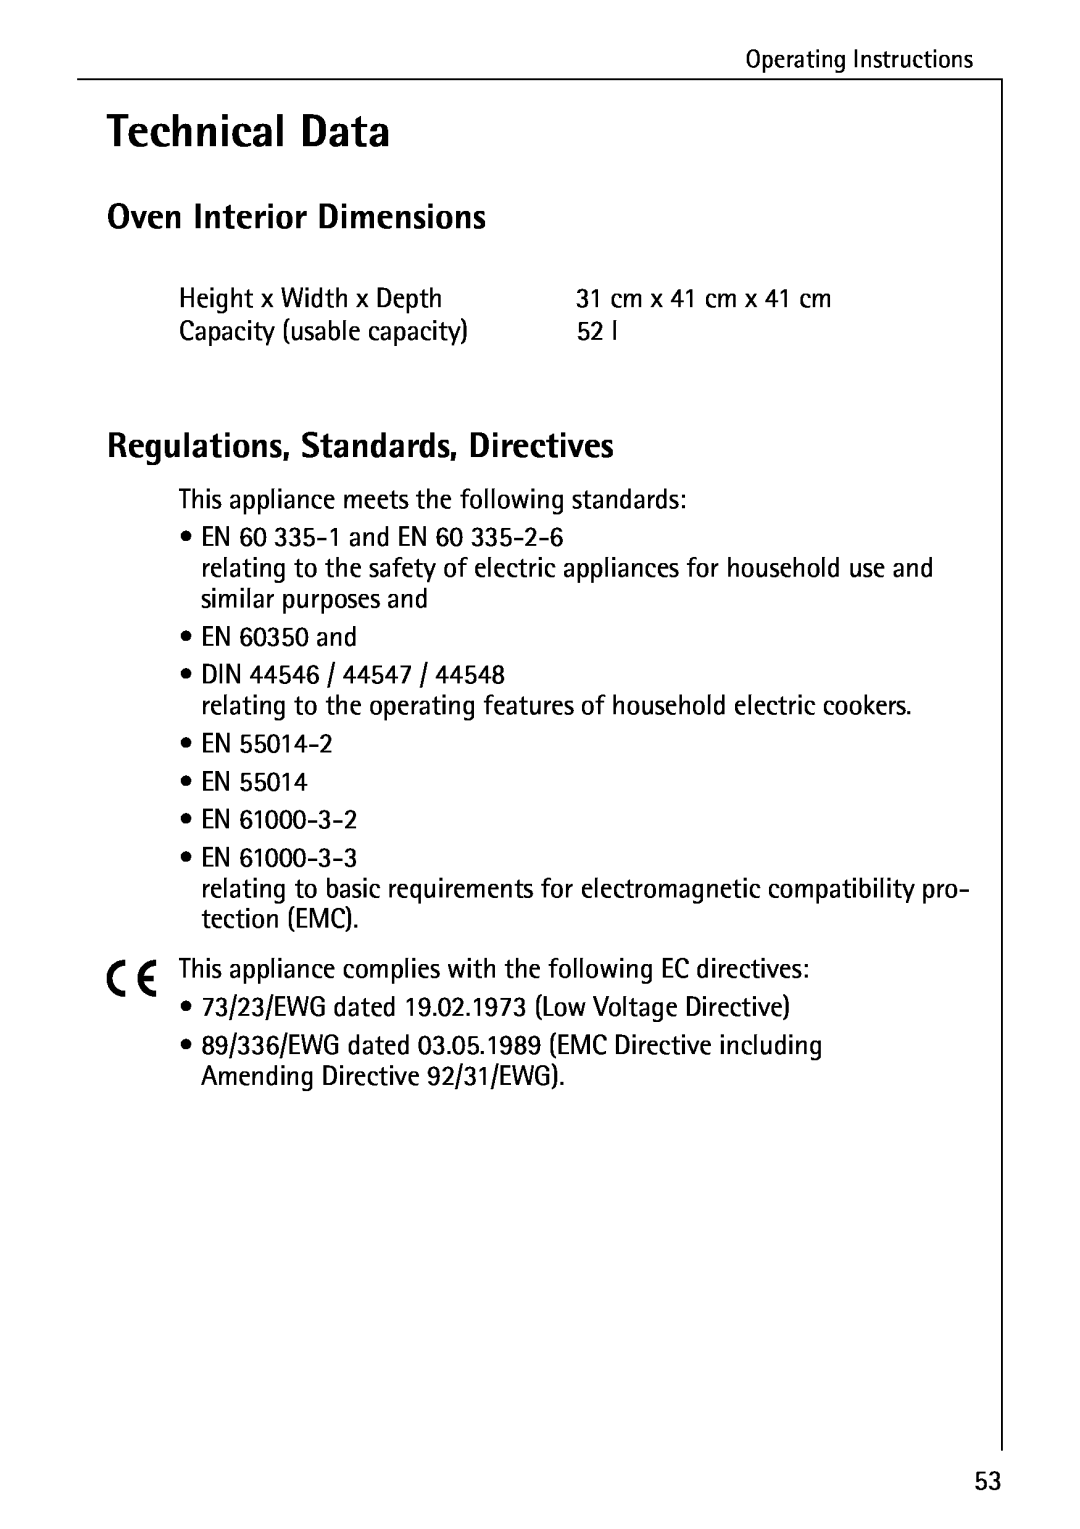 AEG E4100-1 manual Technical Data, Oven Interior Dimensions, Regulations, Standards, Directives 